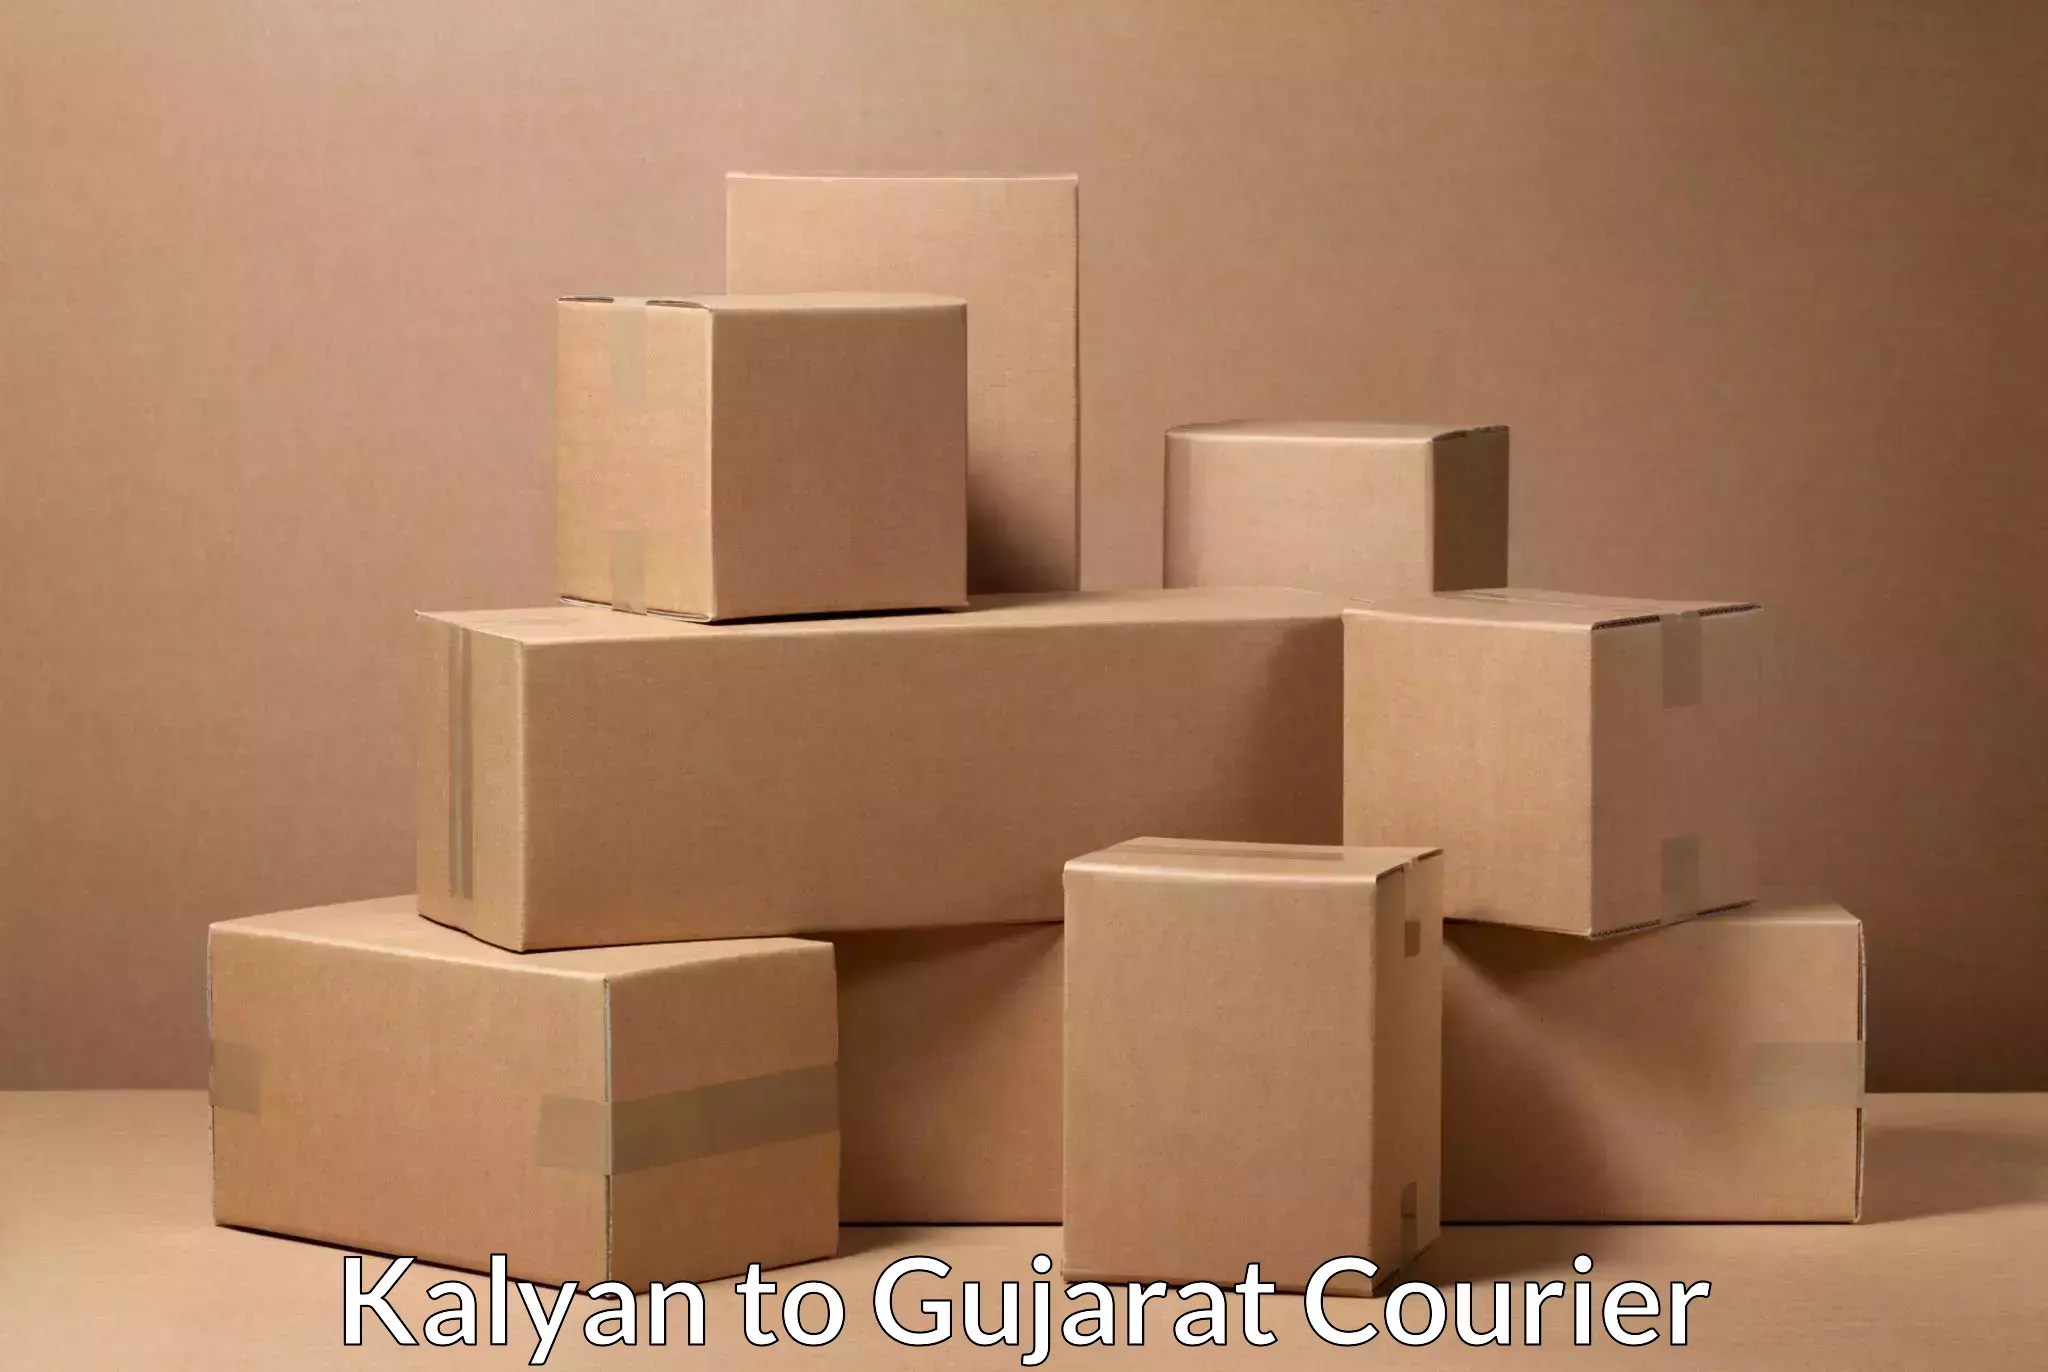 Courier service comparison Kalyan to Narmada Gujarat